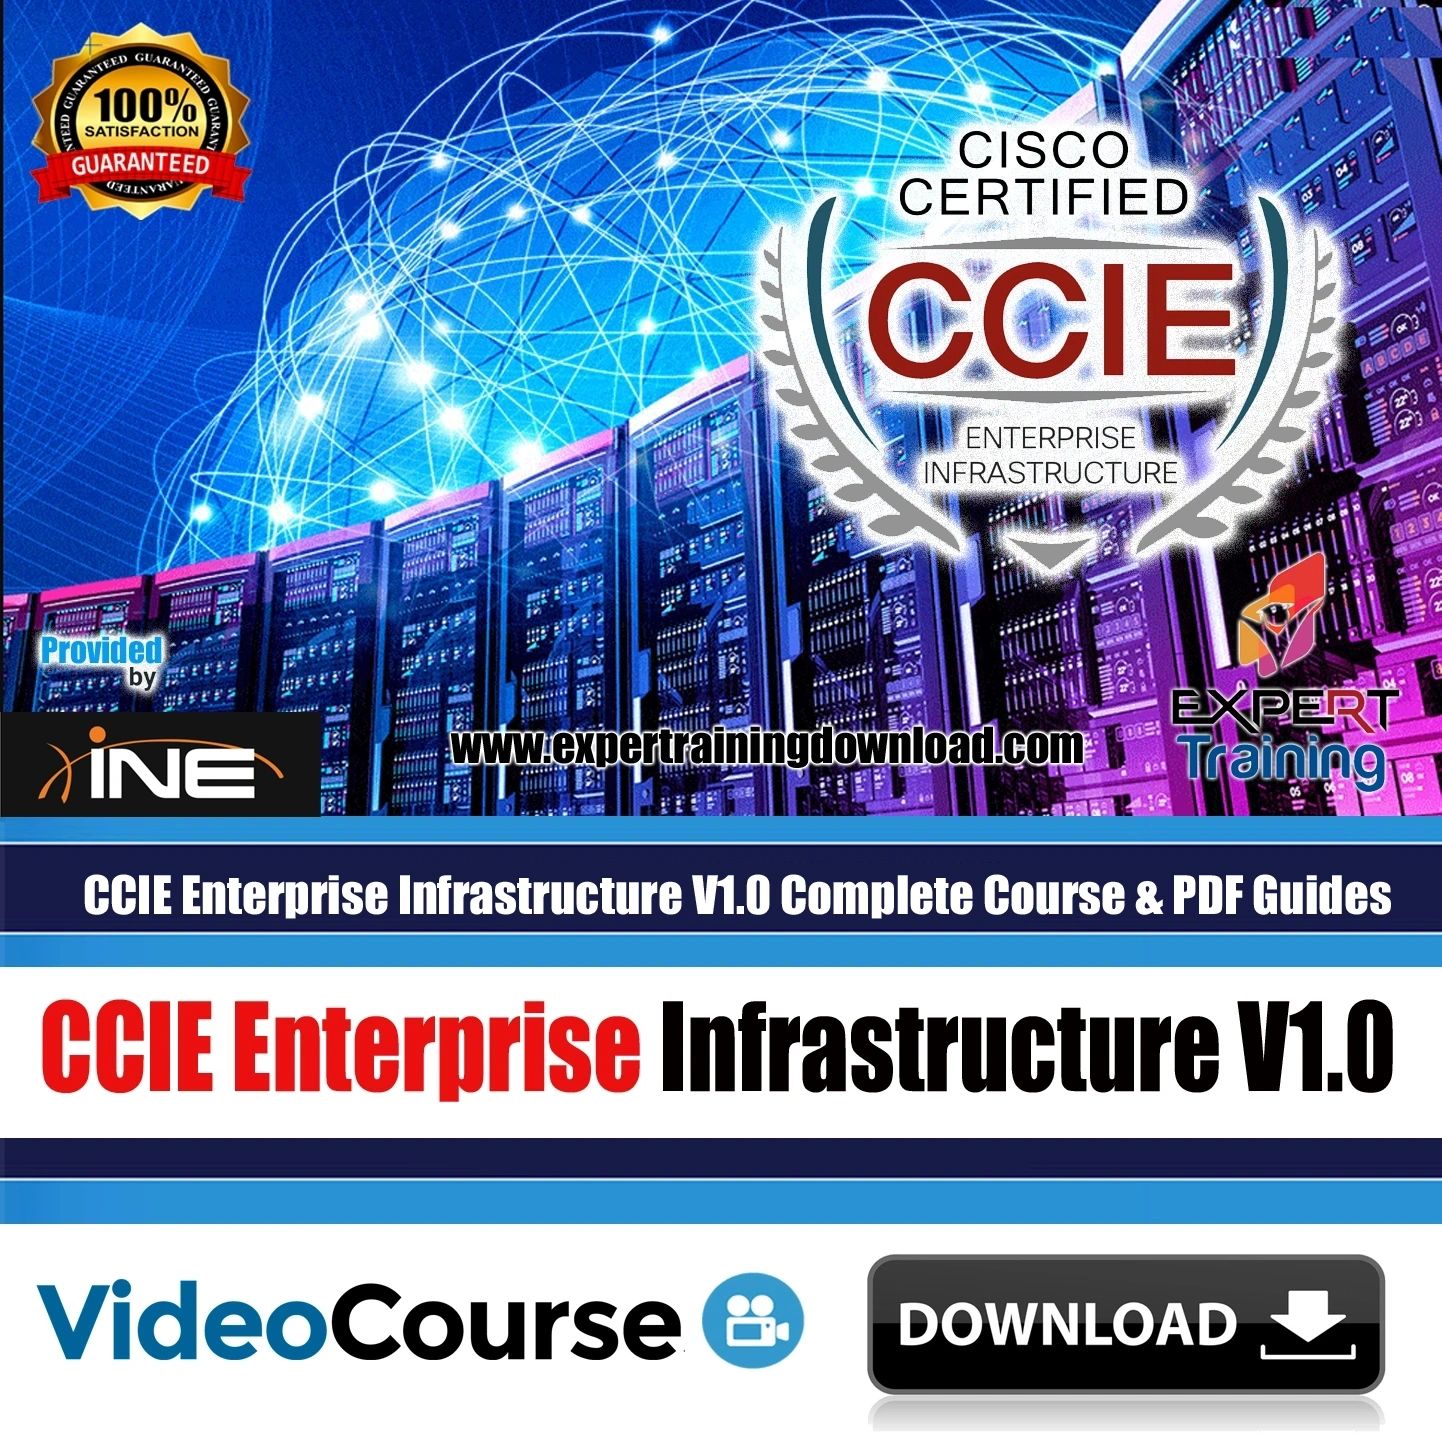 CCIE Enterprise Infrastructure V1.0 Complete Online Course & PDF Guides